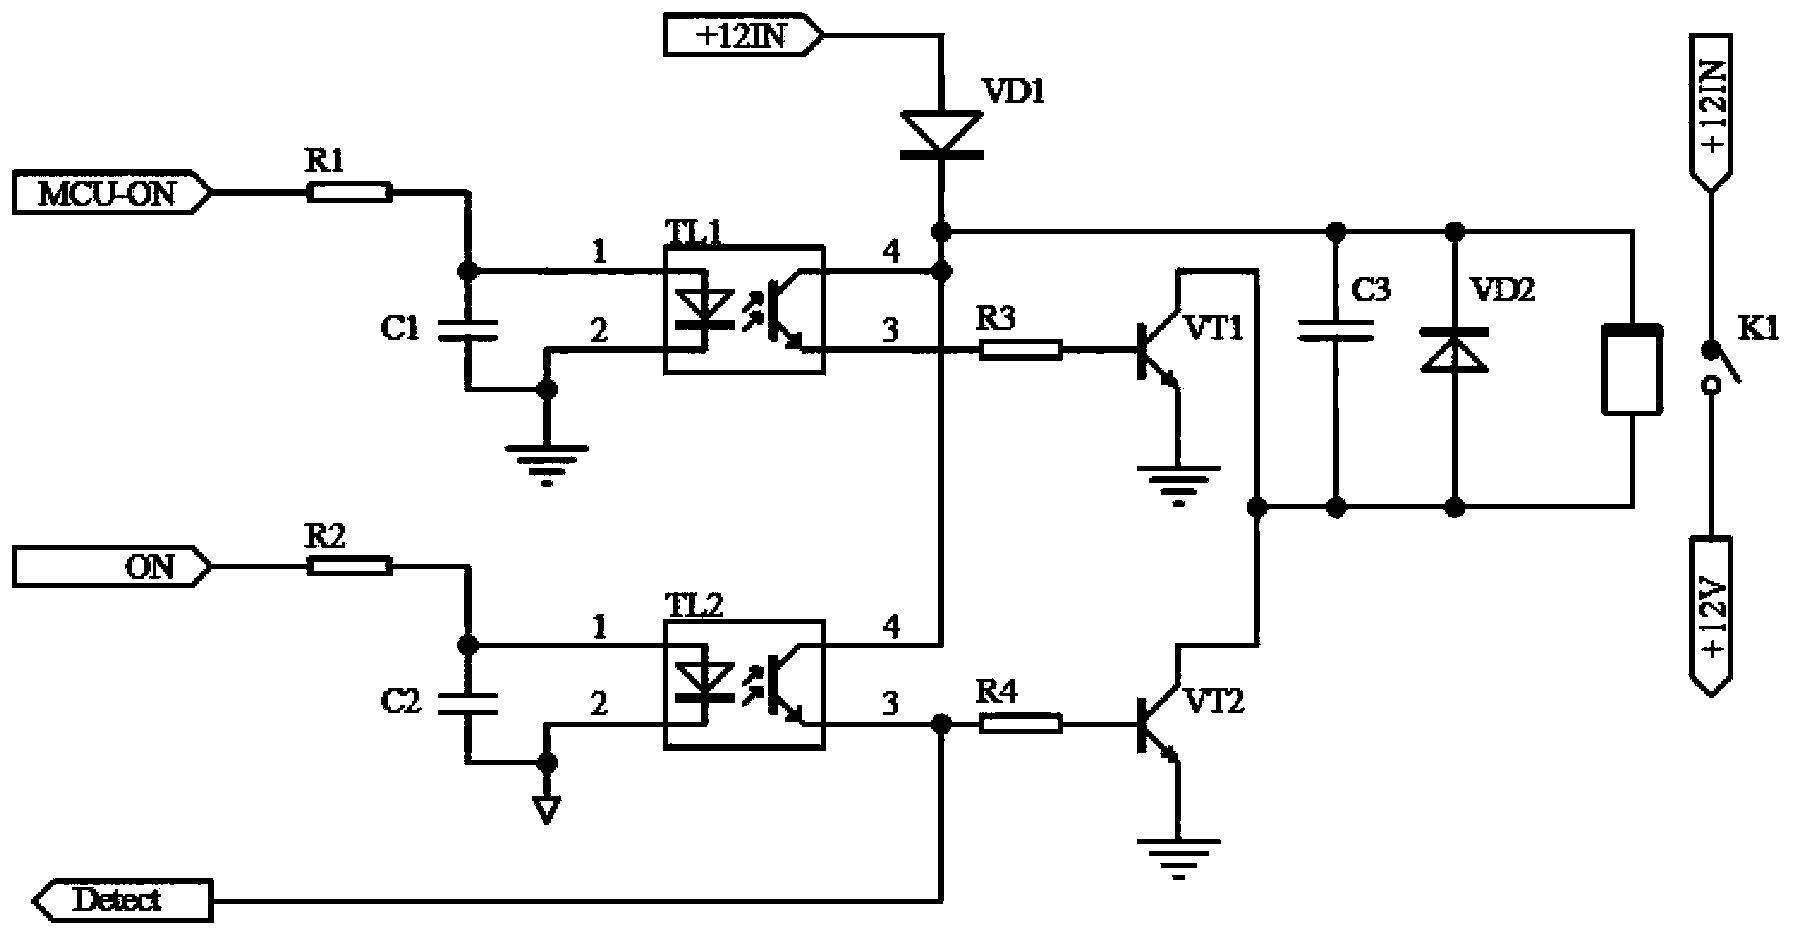 Dormancy control circuit